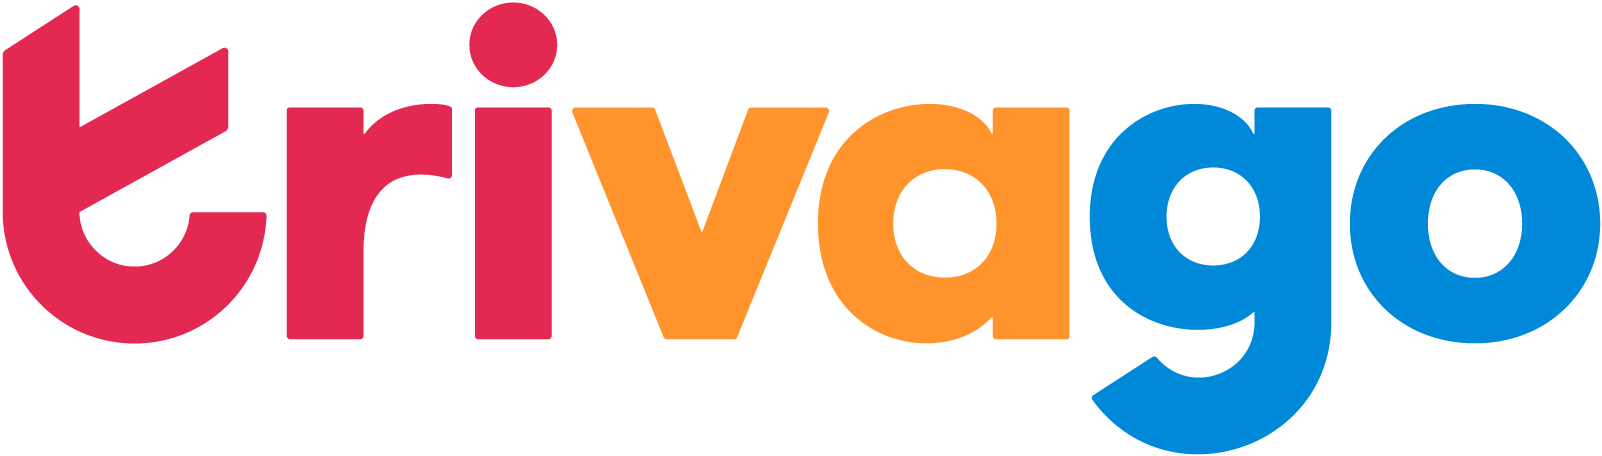 Boyzone logo Vector Logo - Download Free SVG Icon